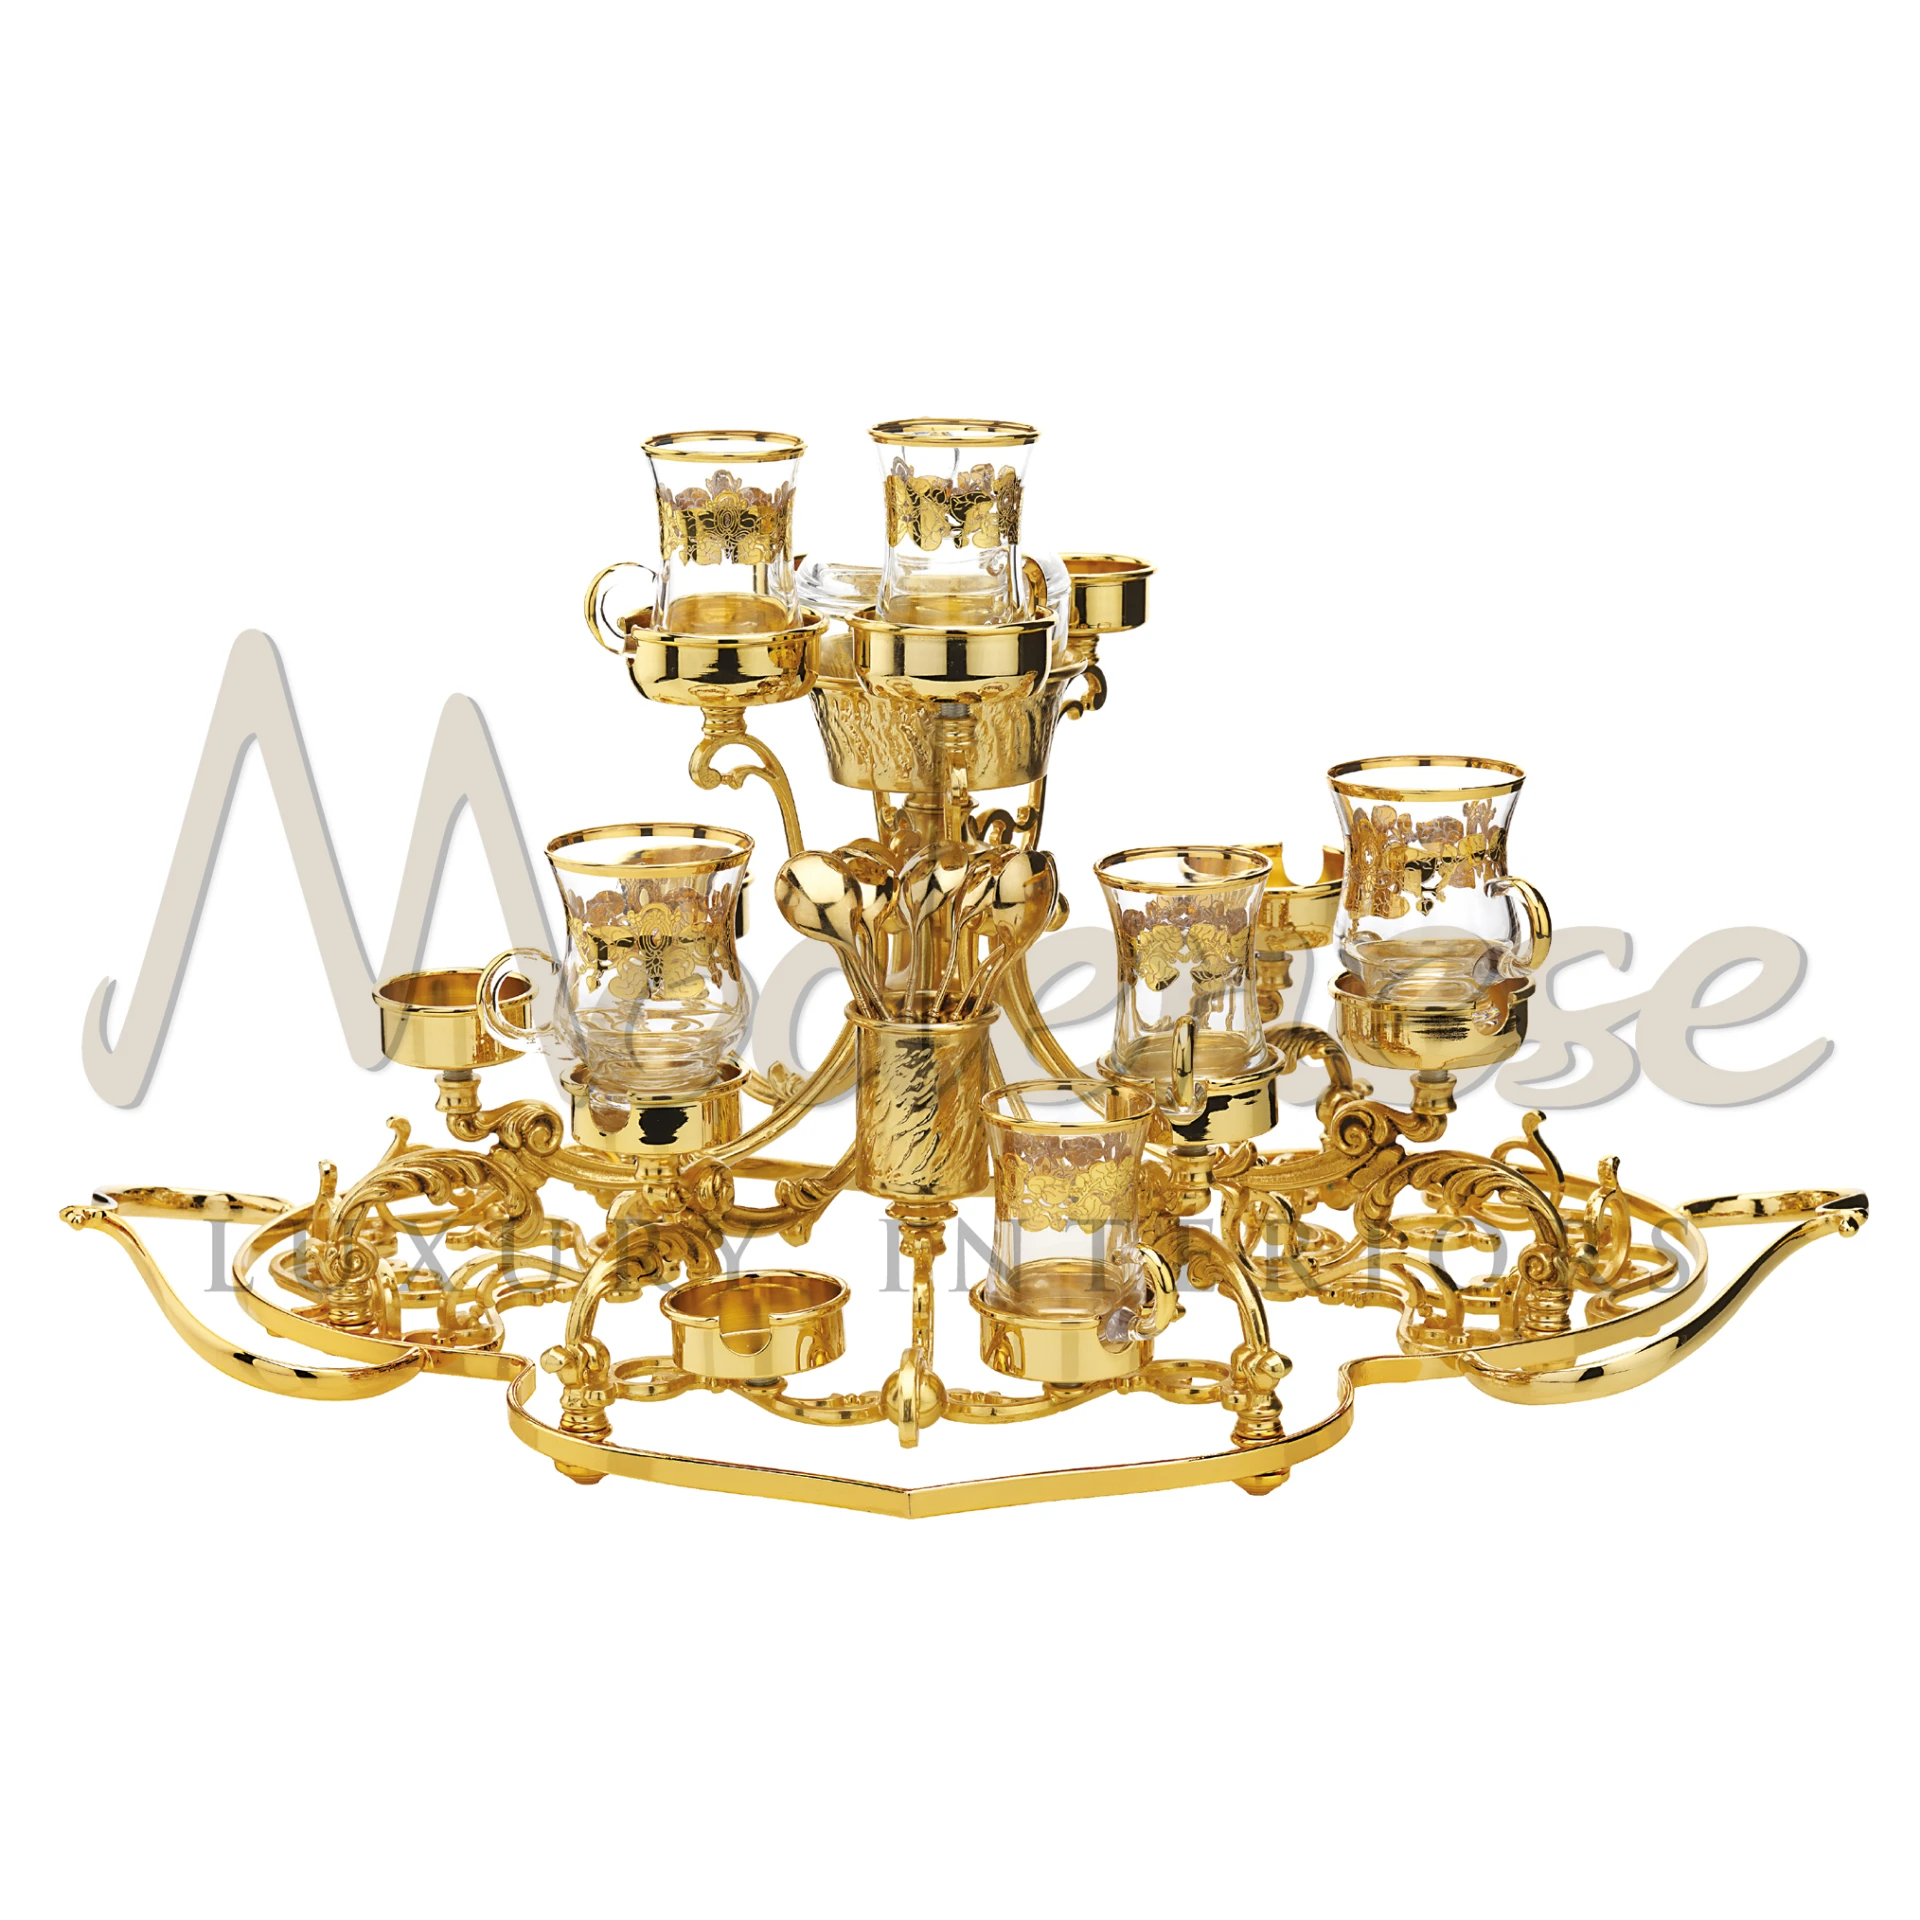 Luxurious Golden Tea Set with Intricate Designs